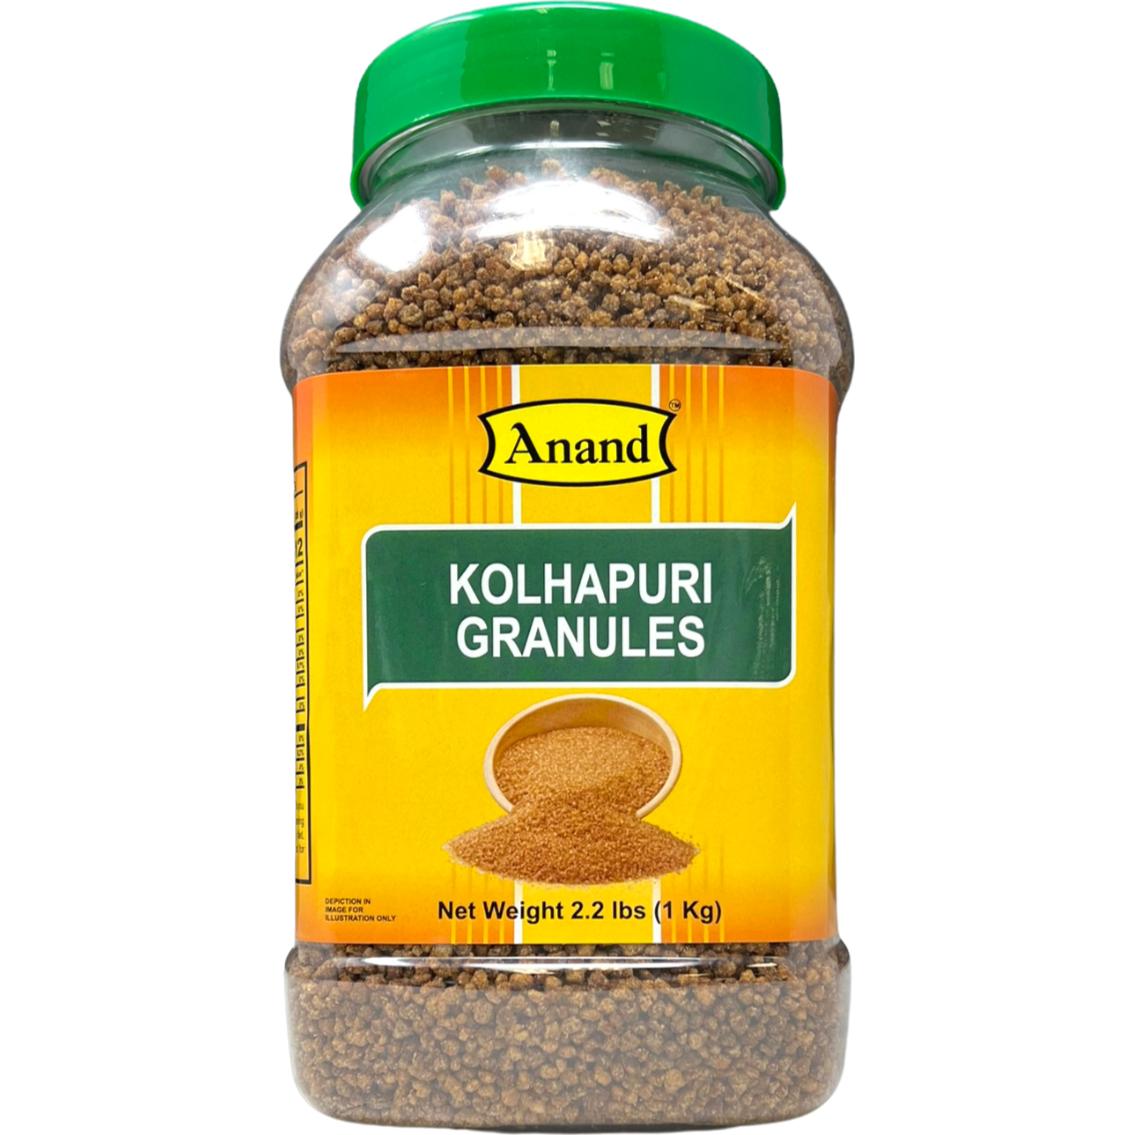 Anand Kohlapuri Granules - 1 Kg (2.2 Lb)